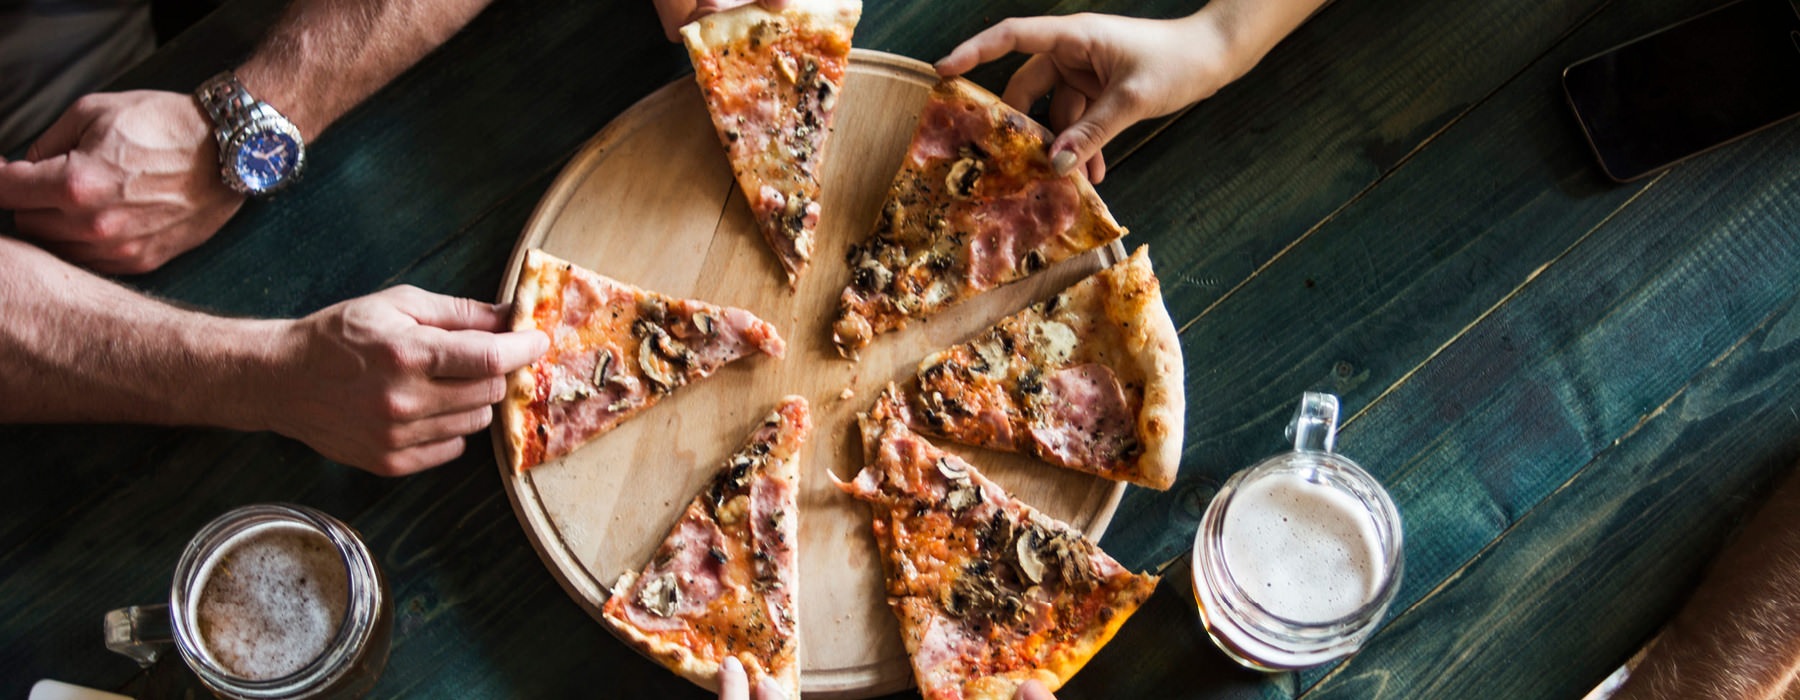 hands grab pizza slices around restaurant table